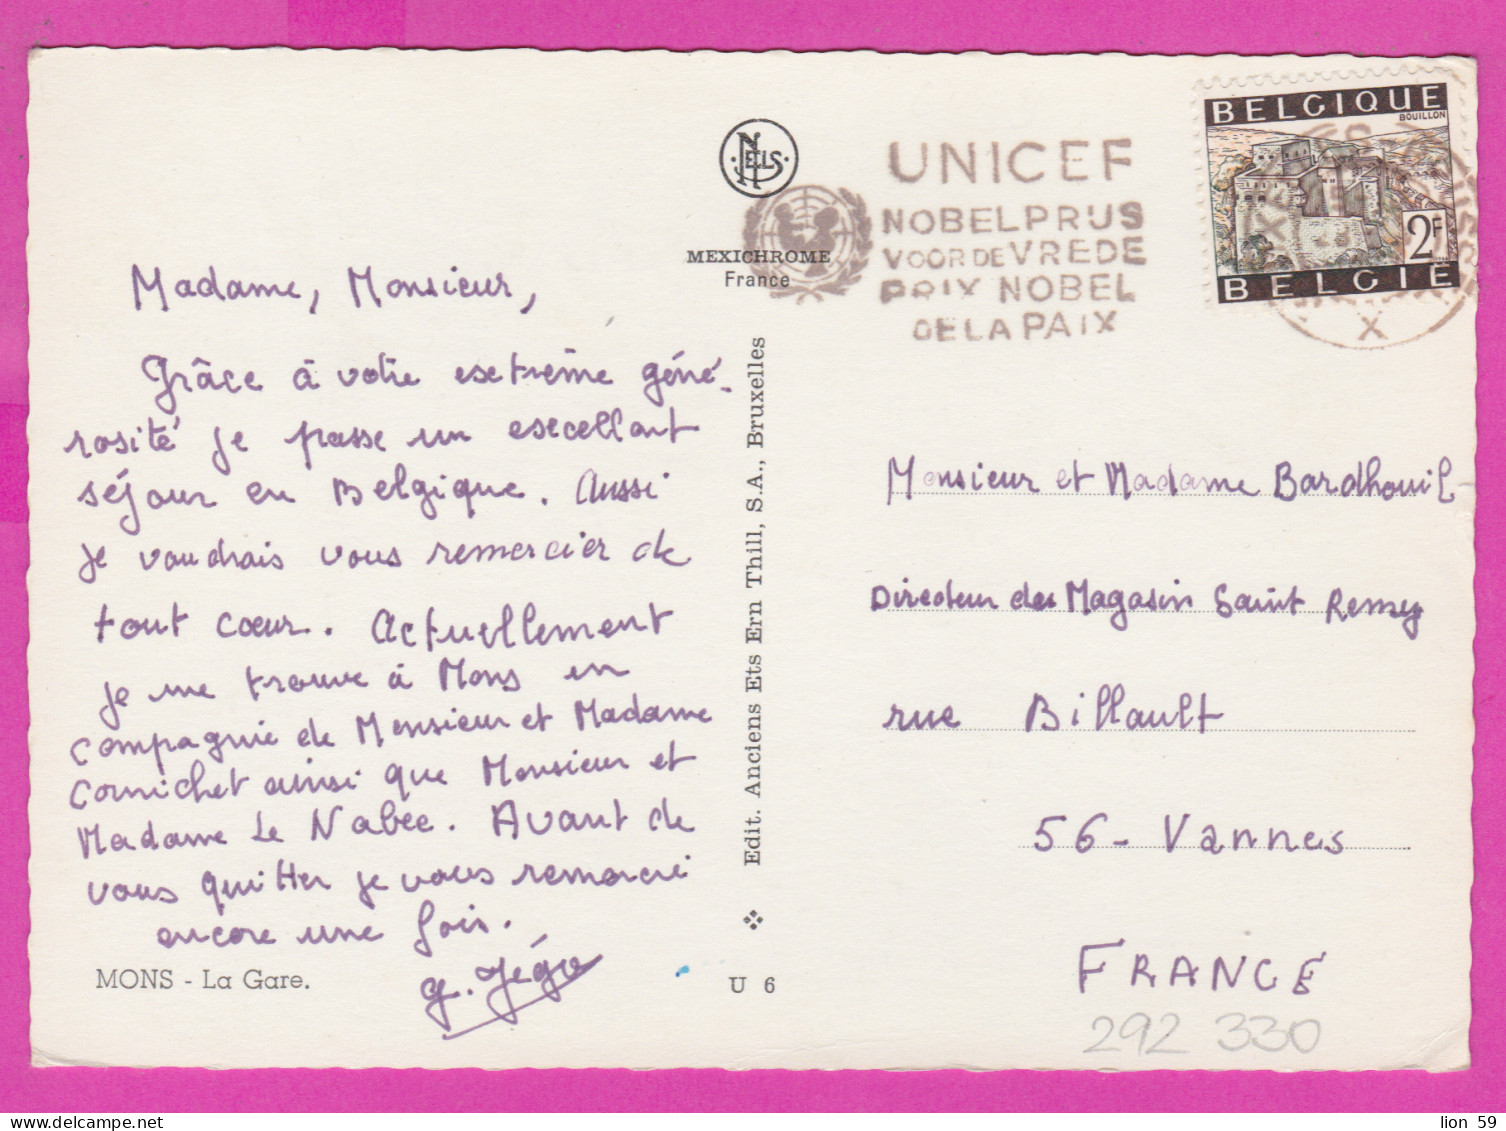 292330 / Belgium Mons - Night La Gare Train Station PC Used (O) 1966 2Fr. Bouillon Castle Flamme UNICEF Prix Nobel - Mons